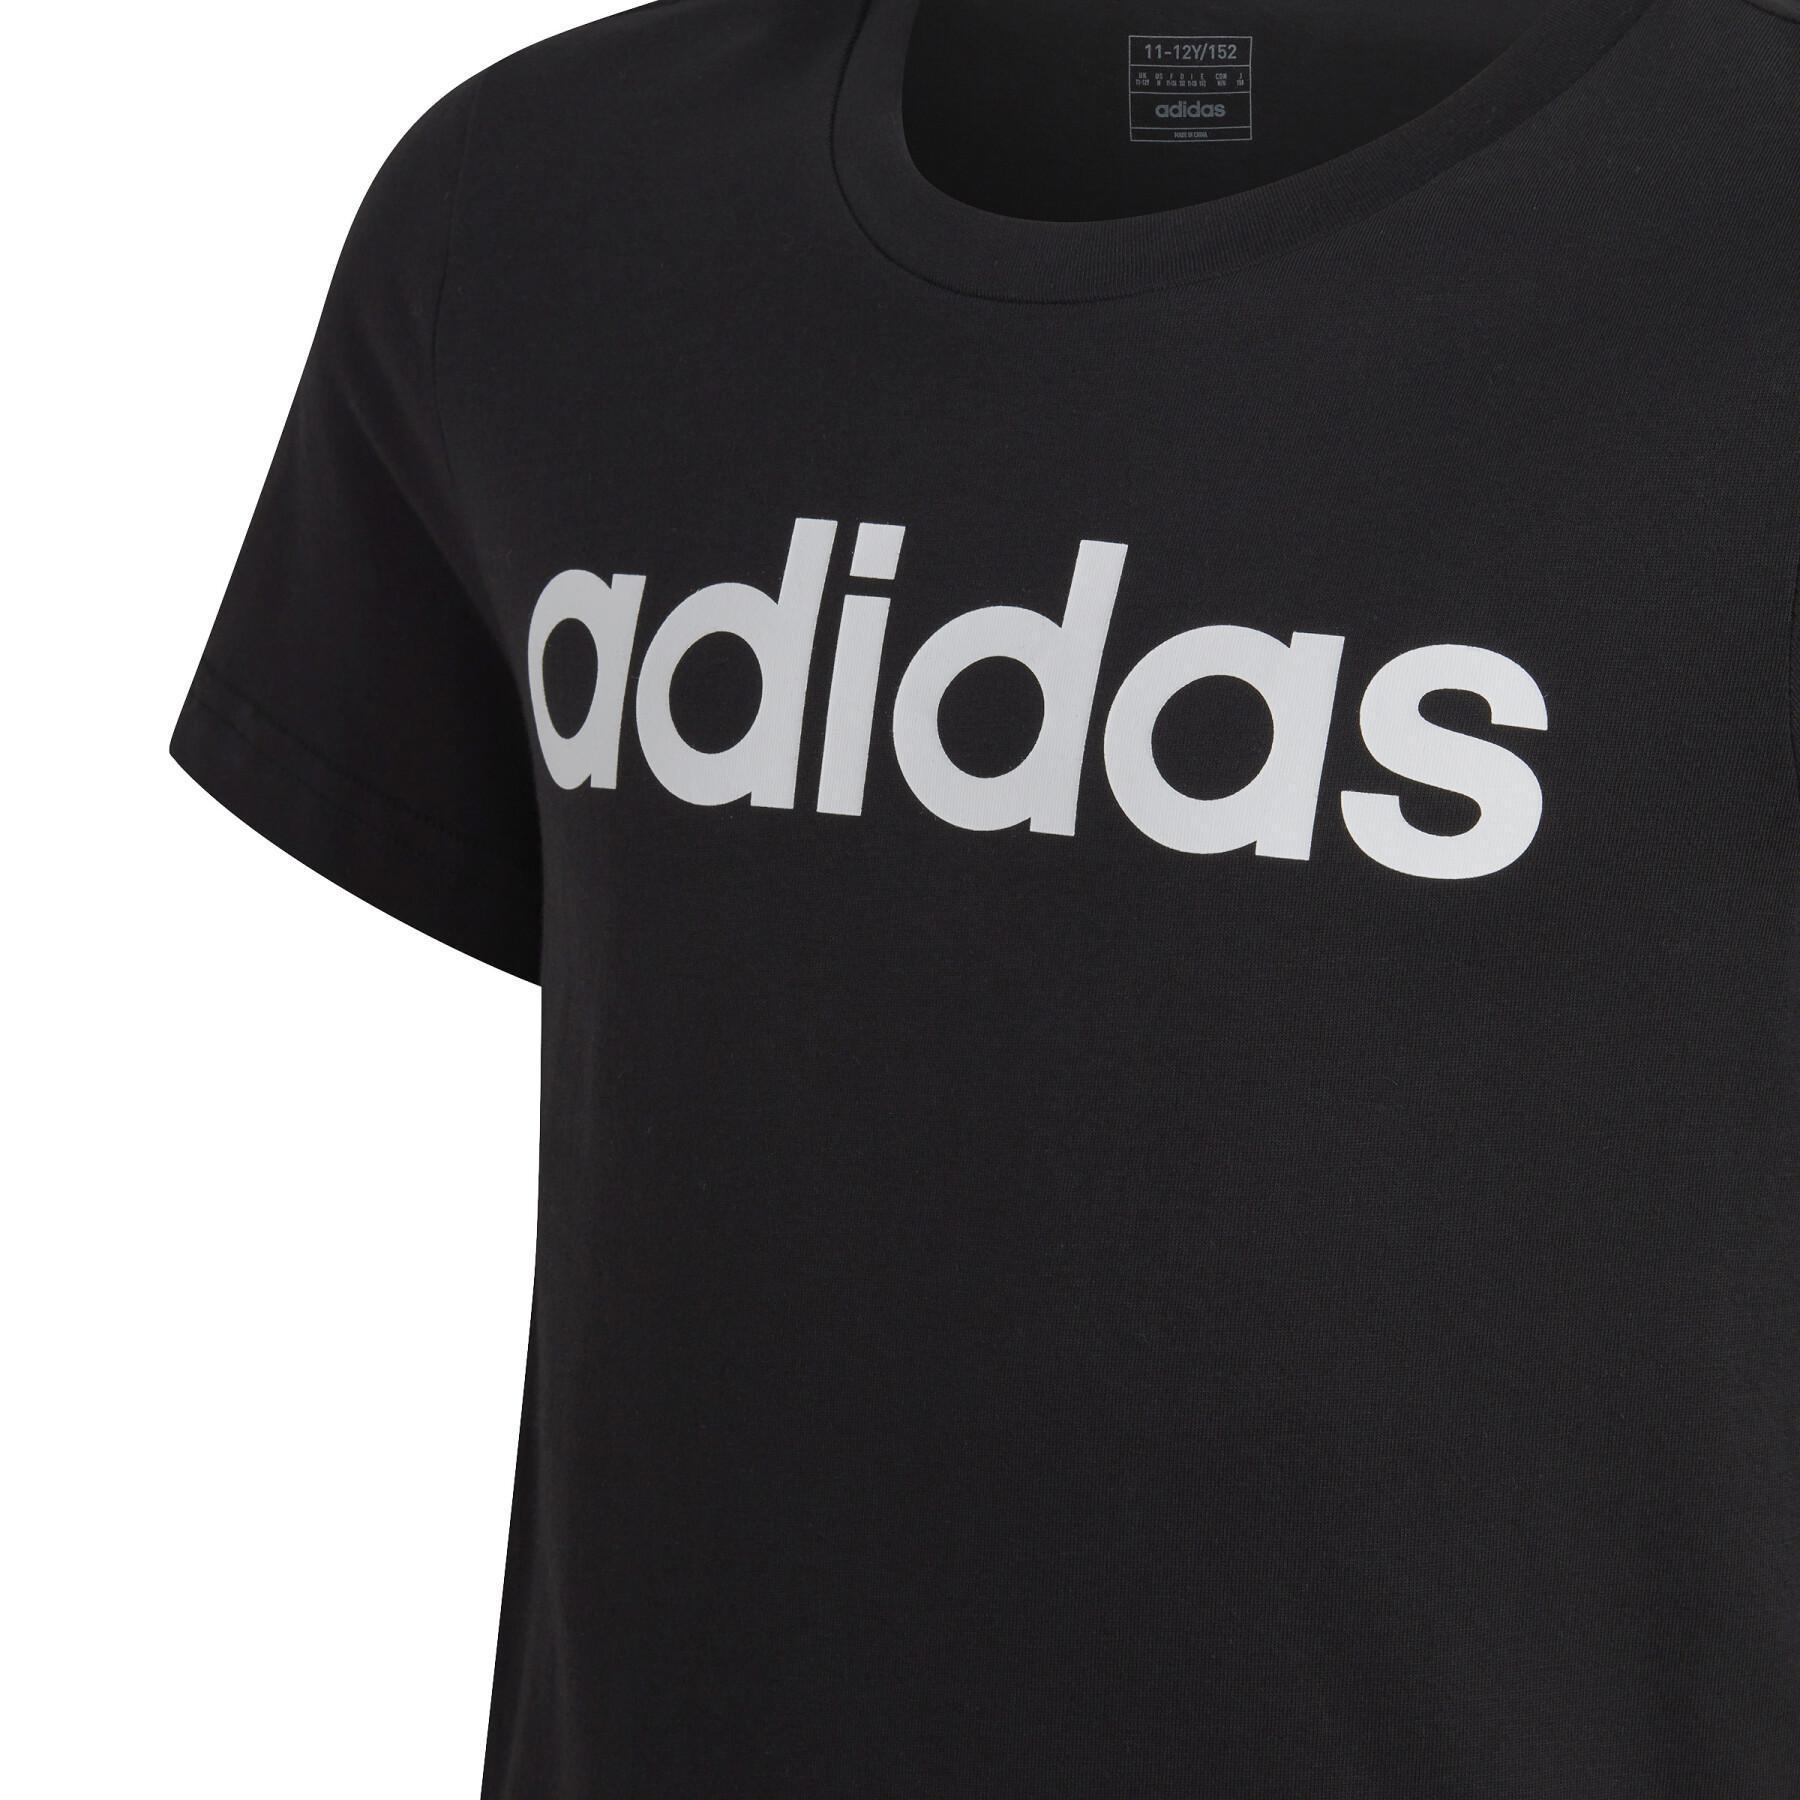 construcción solar civilización Girl's cotton logo t-shirt adidas Essentials Linear Logo - adidas - Brands  - Volleyball wear